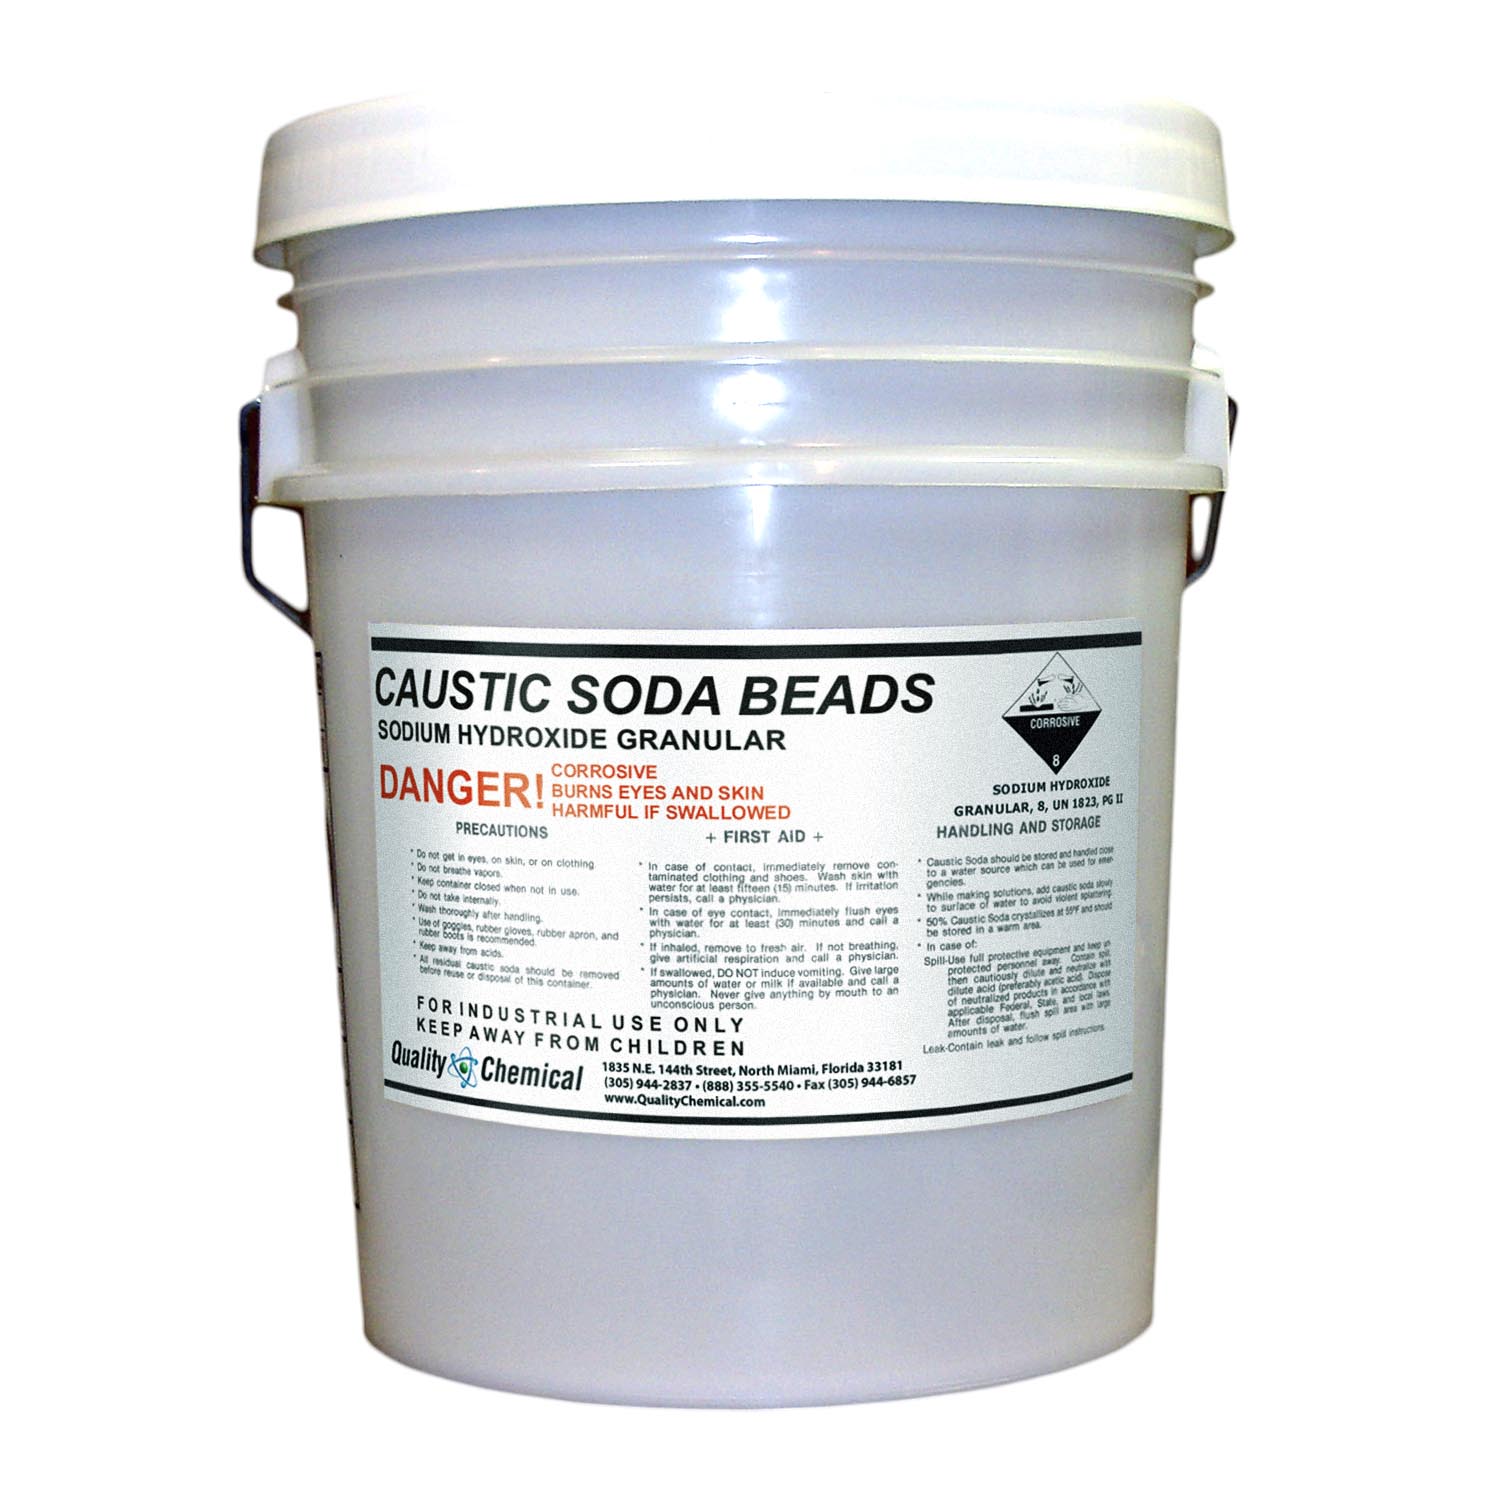 Sodium Hydroxide Beads (Caustic Soda) - 40 lb pail